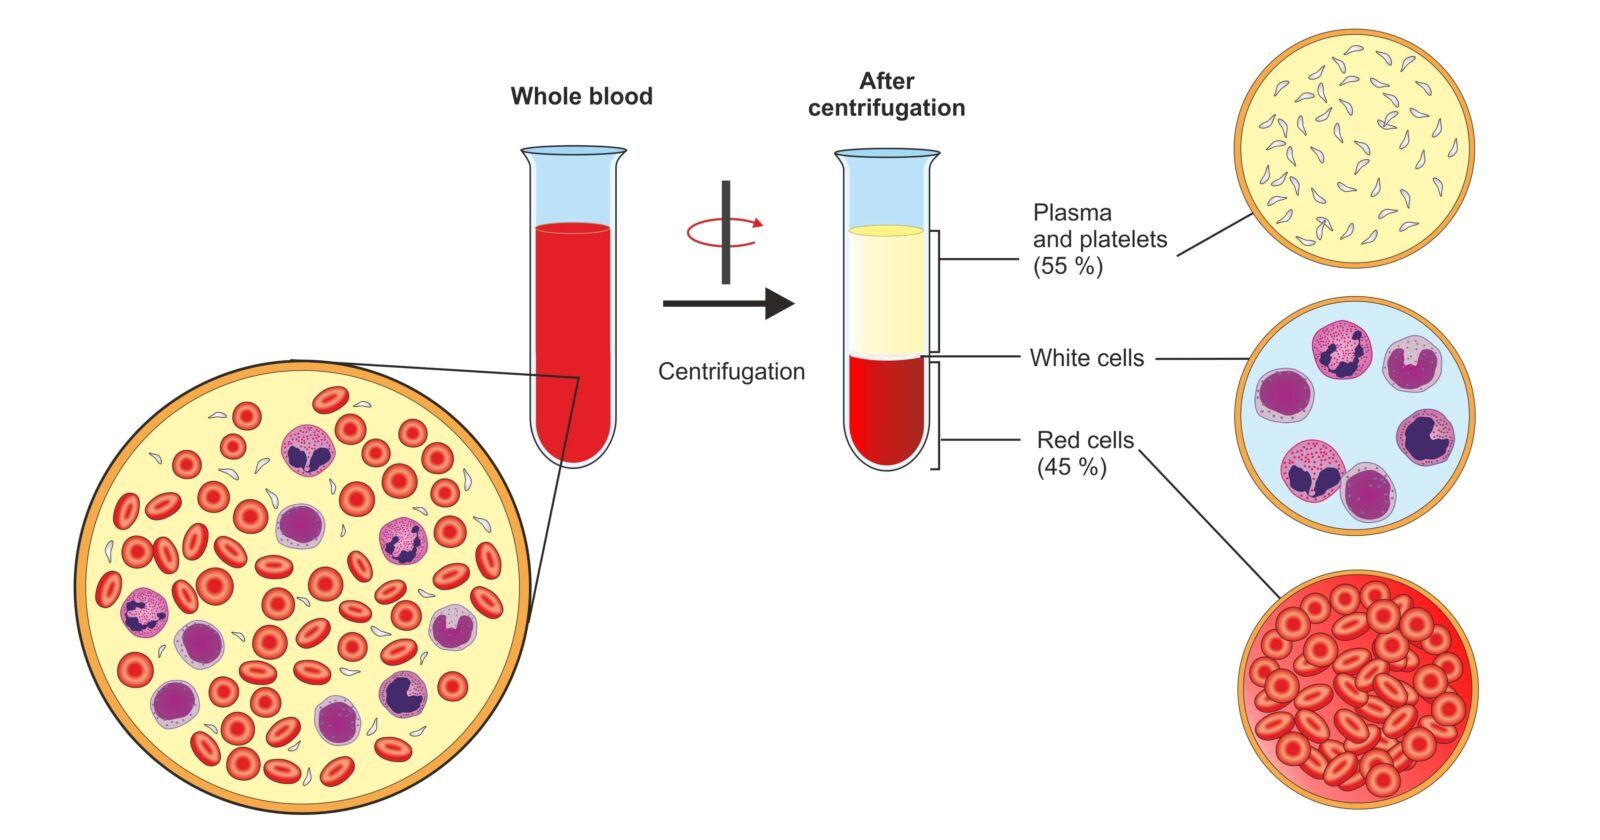 platelet-rich plasma